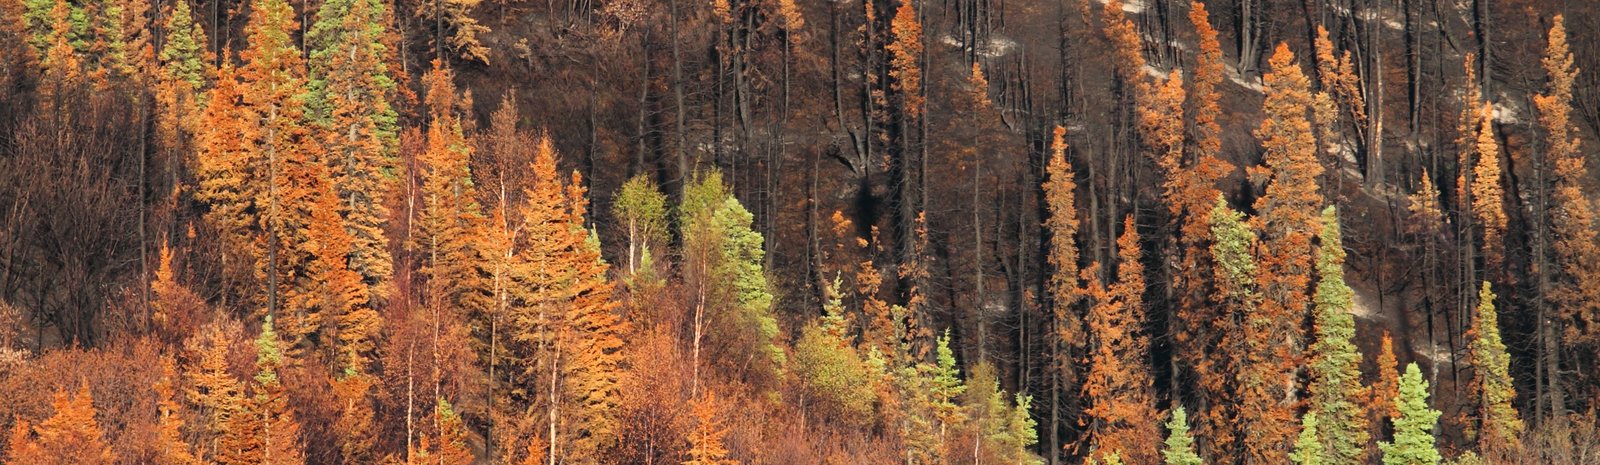 Forestry Management in Alaska